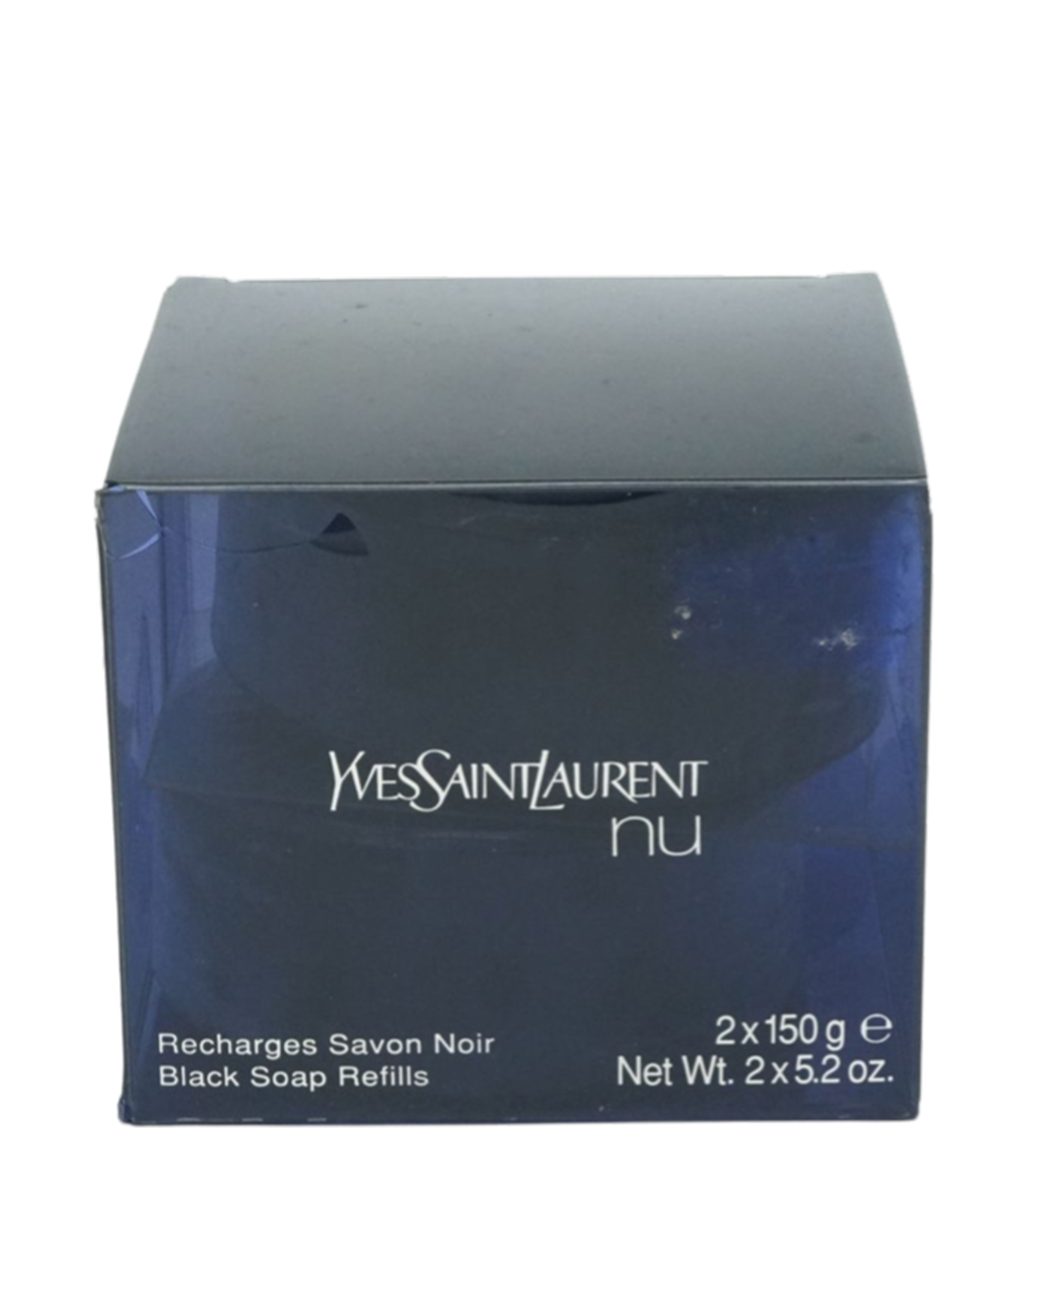 YVES SAINT LAURENT Handseife Yves Saint Laurent Nu Black Soap Refill Seife 2 x150g